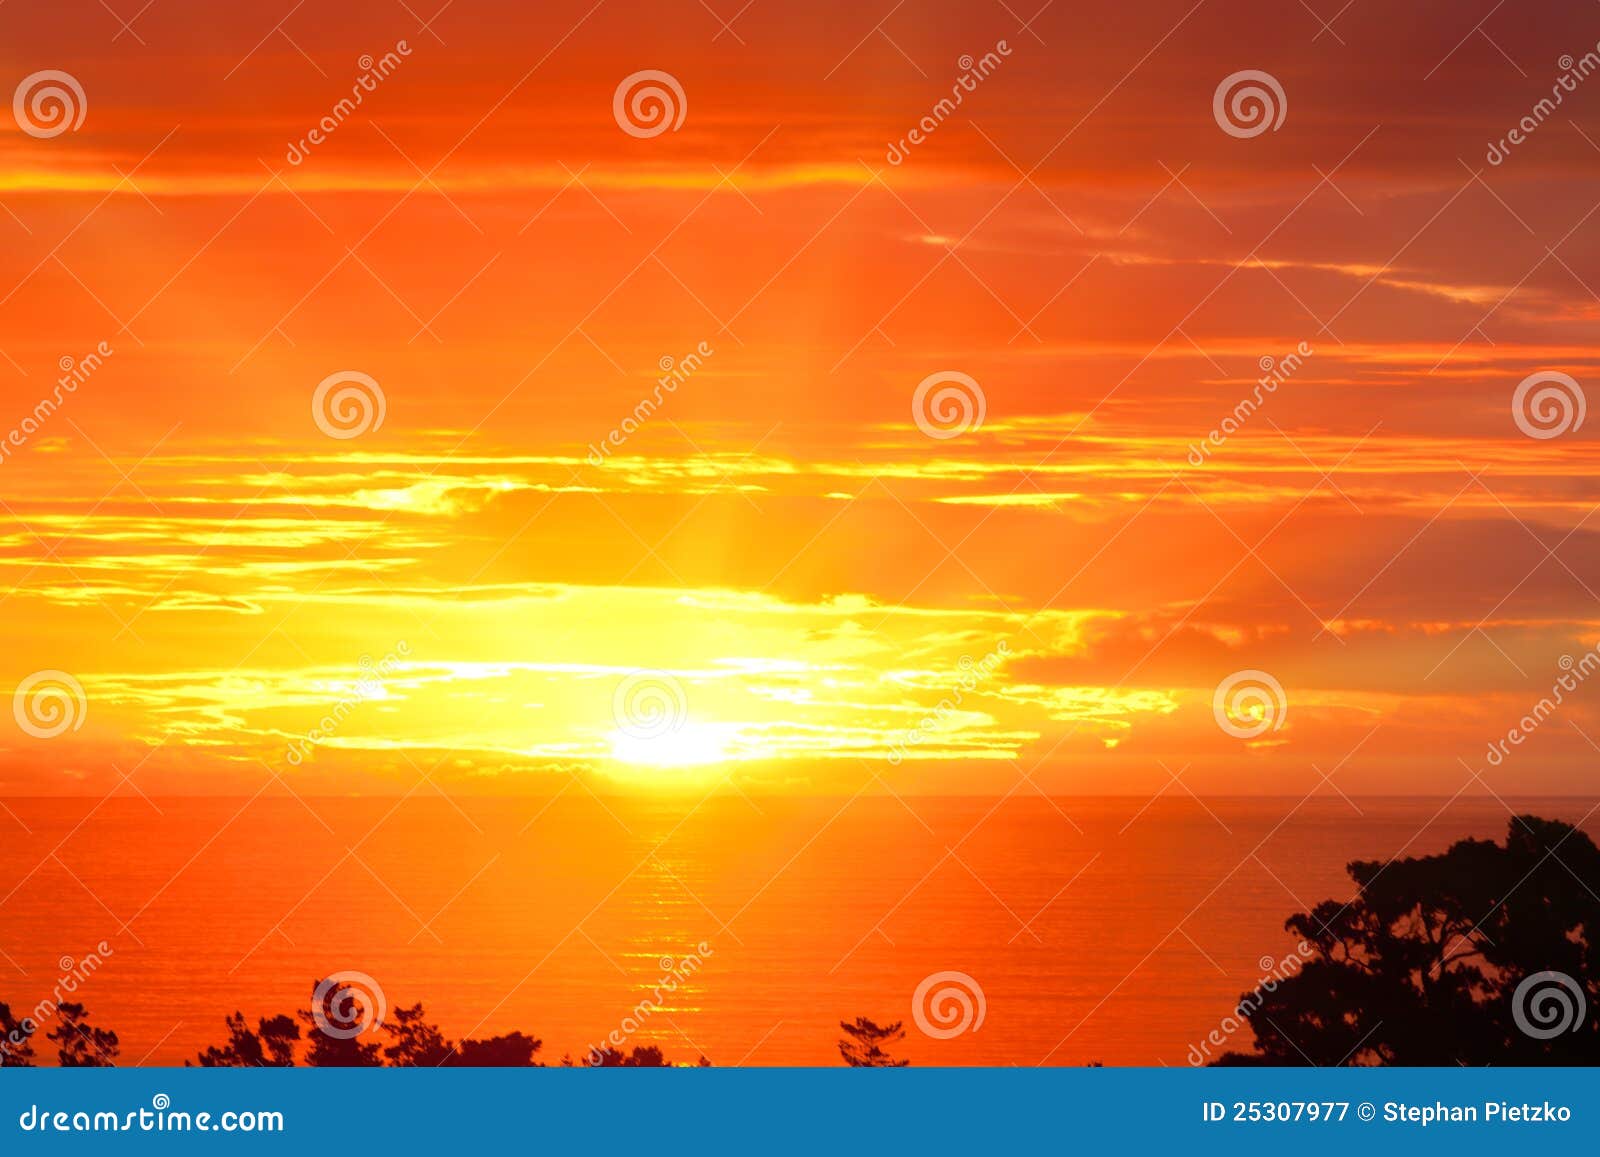 spectacular dramatic orange sunset over the ocean